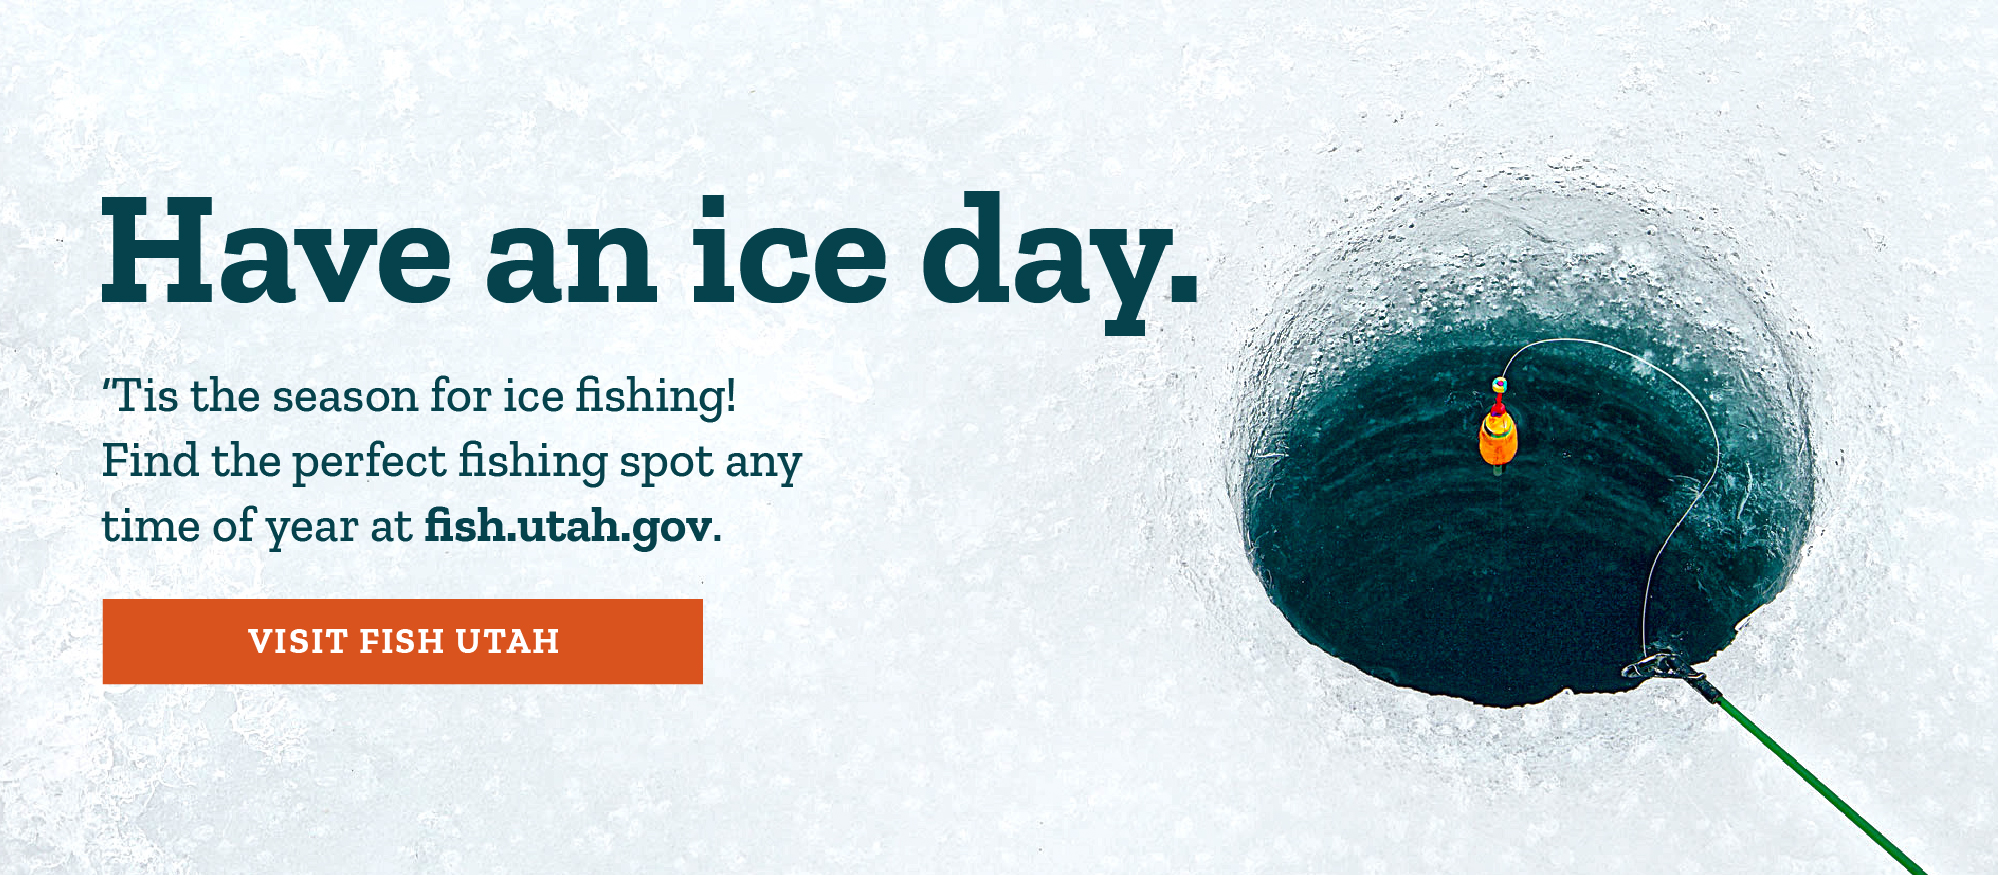 'Tis the season for ice fishing.